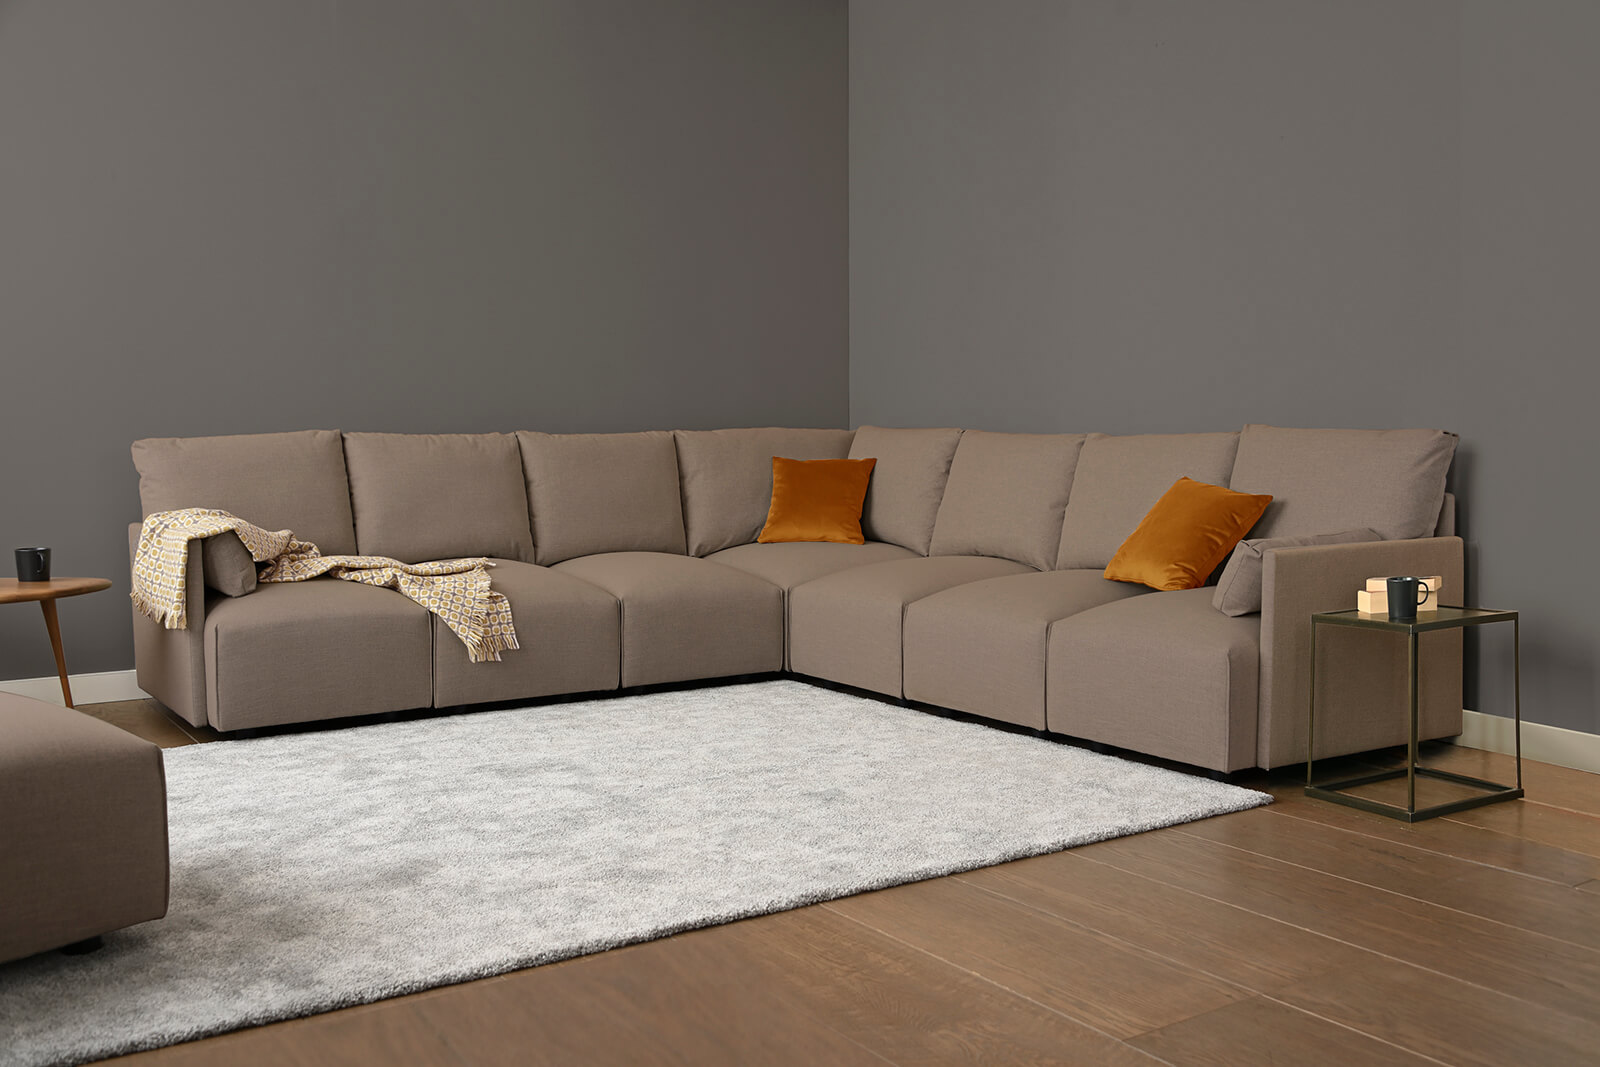 HB04-large-corner-sofa-3q-husk-4x4-lifestyle